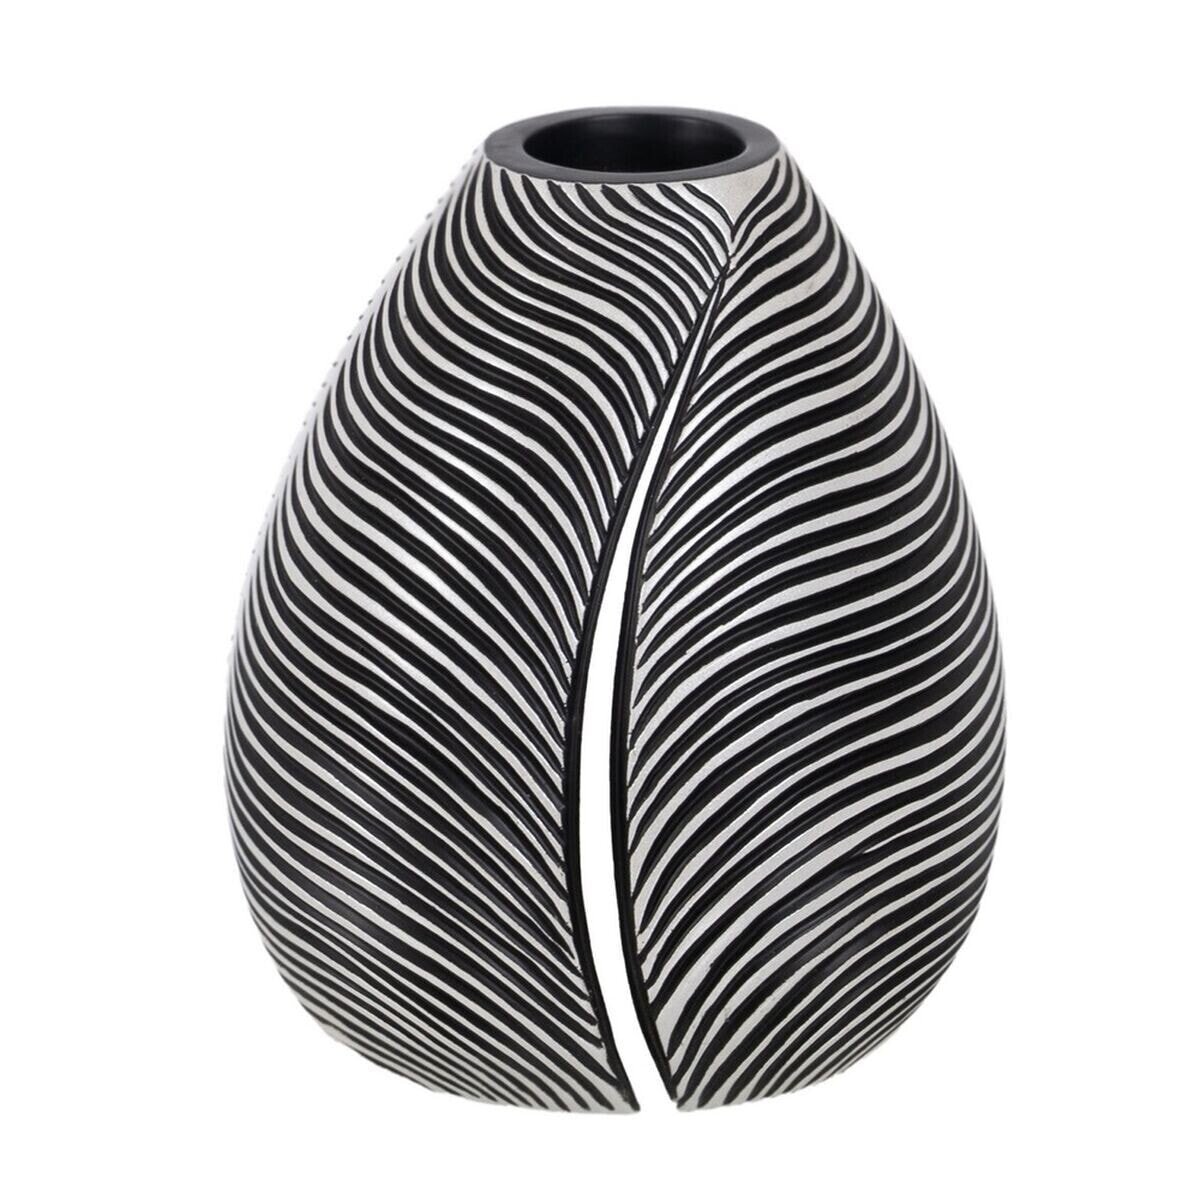 Vase White Black Polyresin 17,5 x 17,5 x 20,5 cm